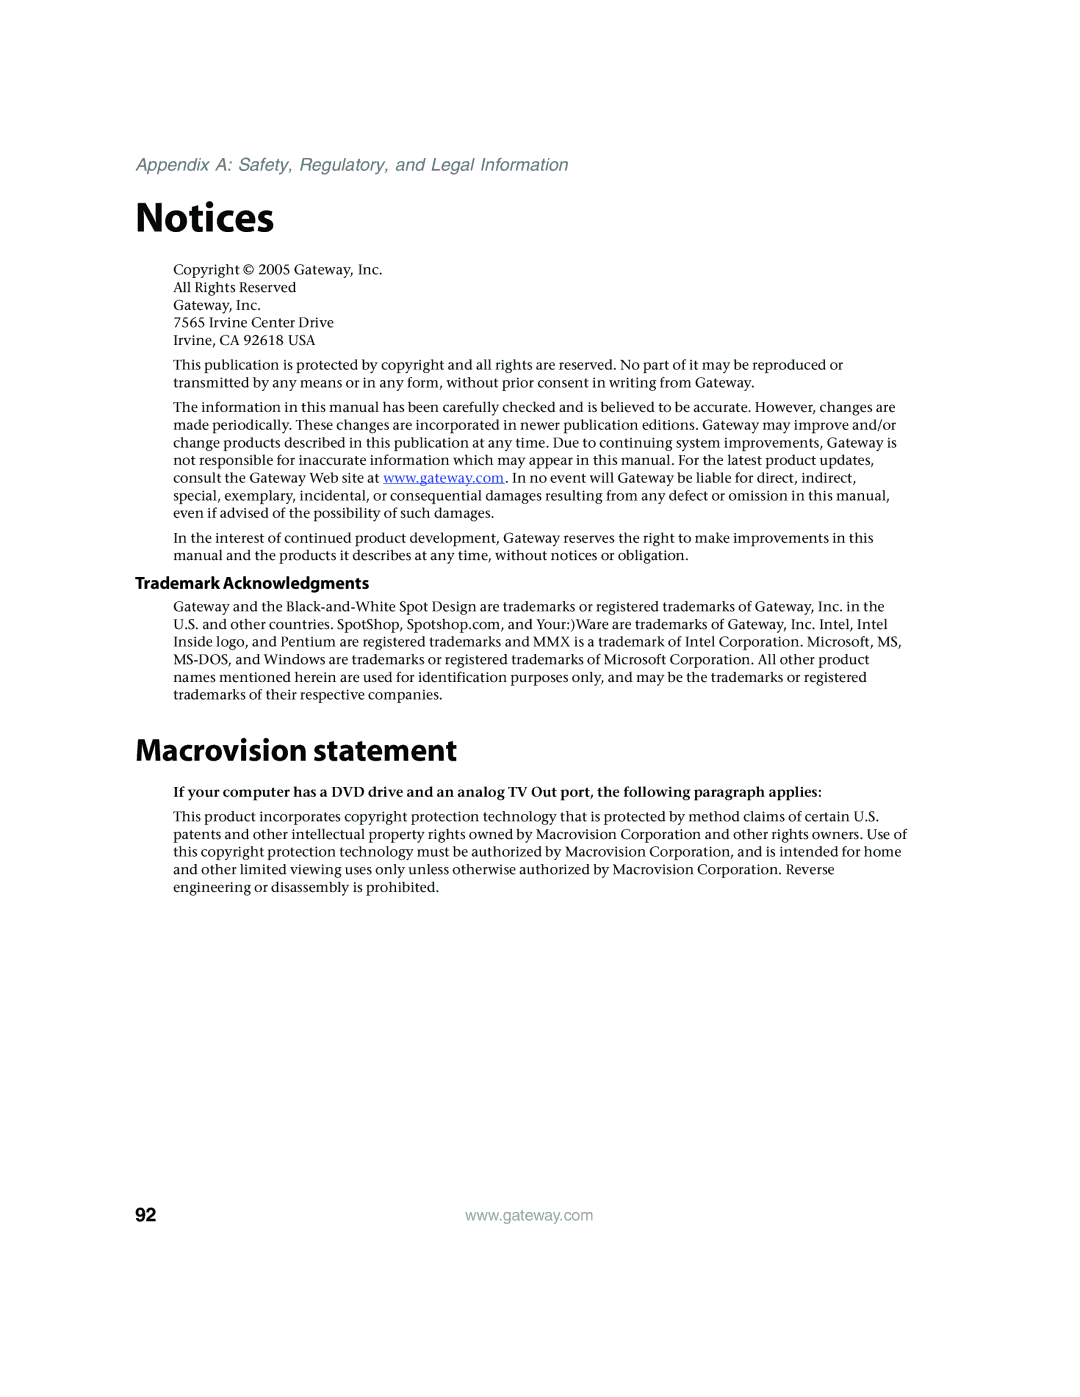 Gateway E4350 manual Macrovision statement, Trademark Acknowledgments 